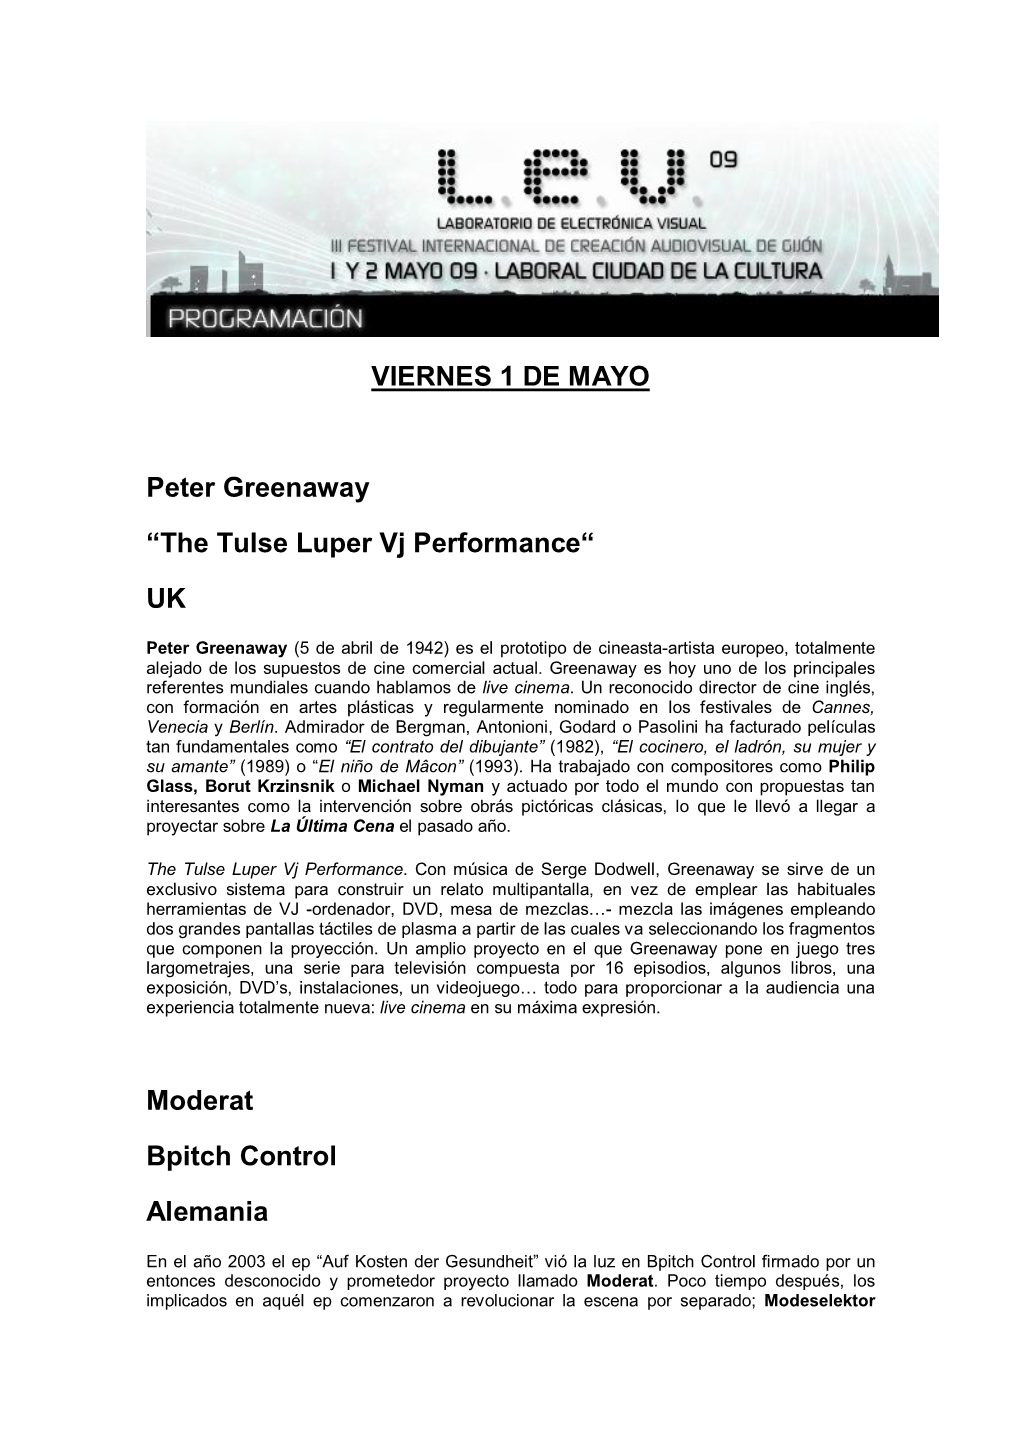 The Tulse Luper Vj Performance“